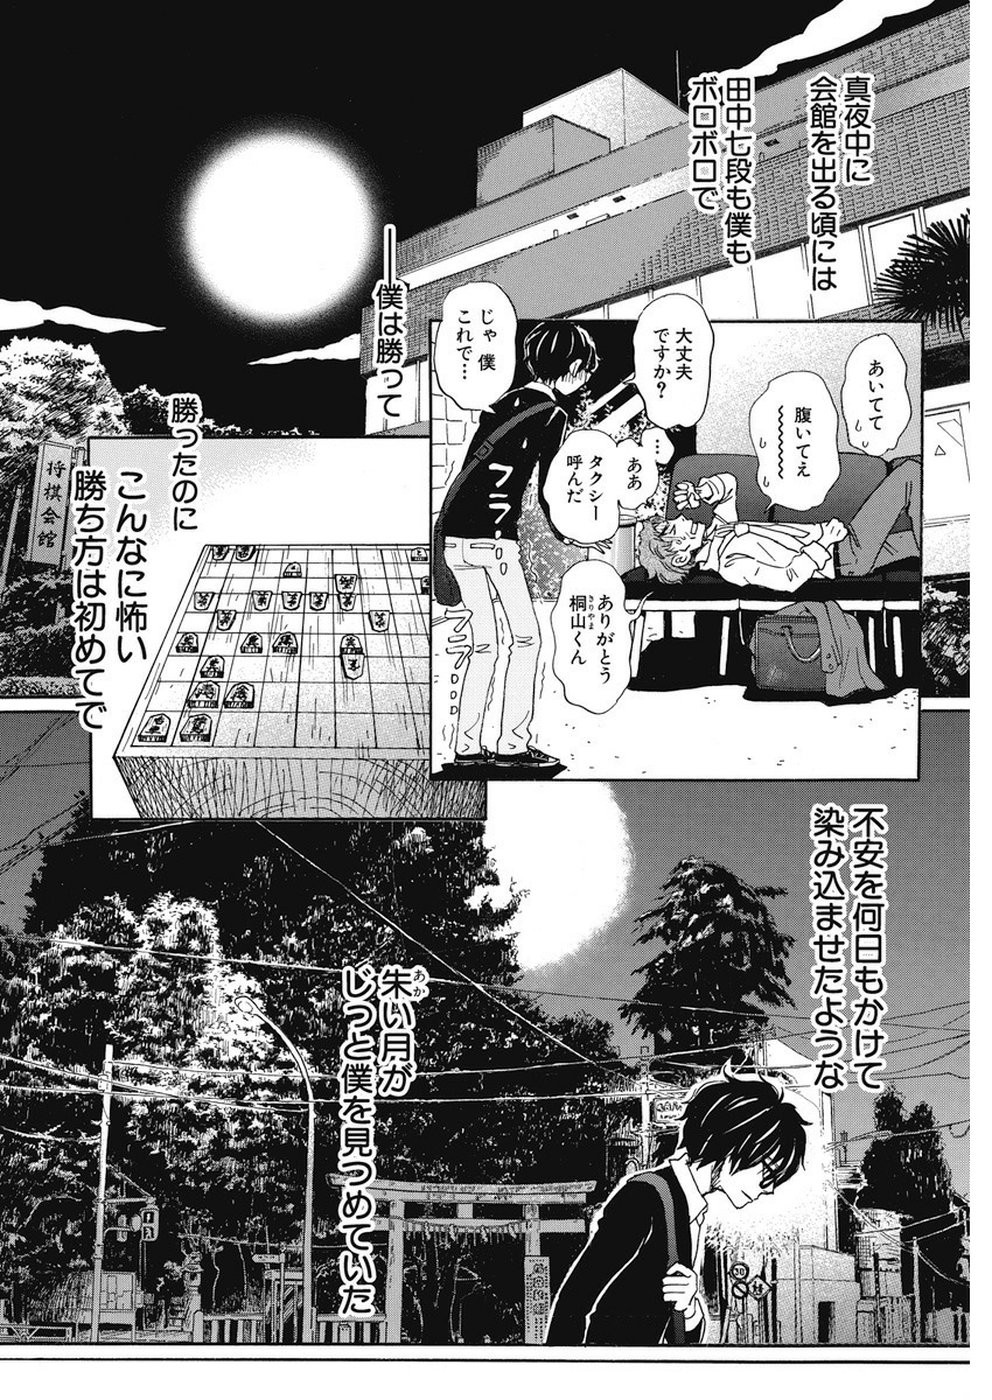 3 Gatsu no Lion - Chapter 164 - Page 4